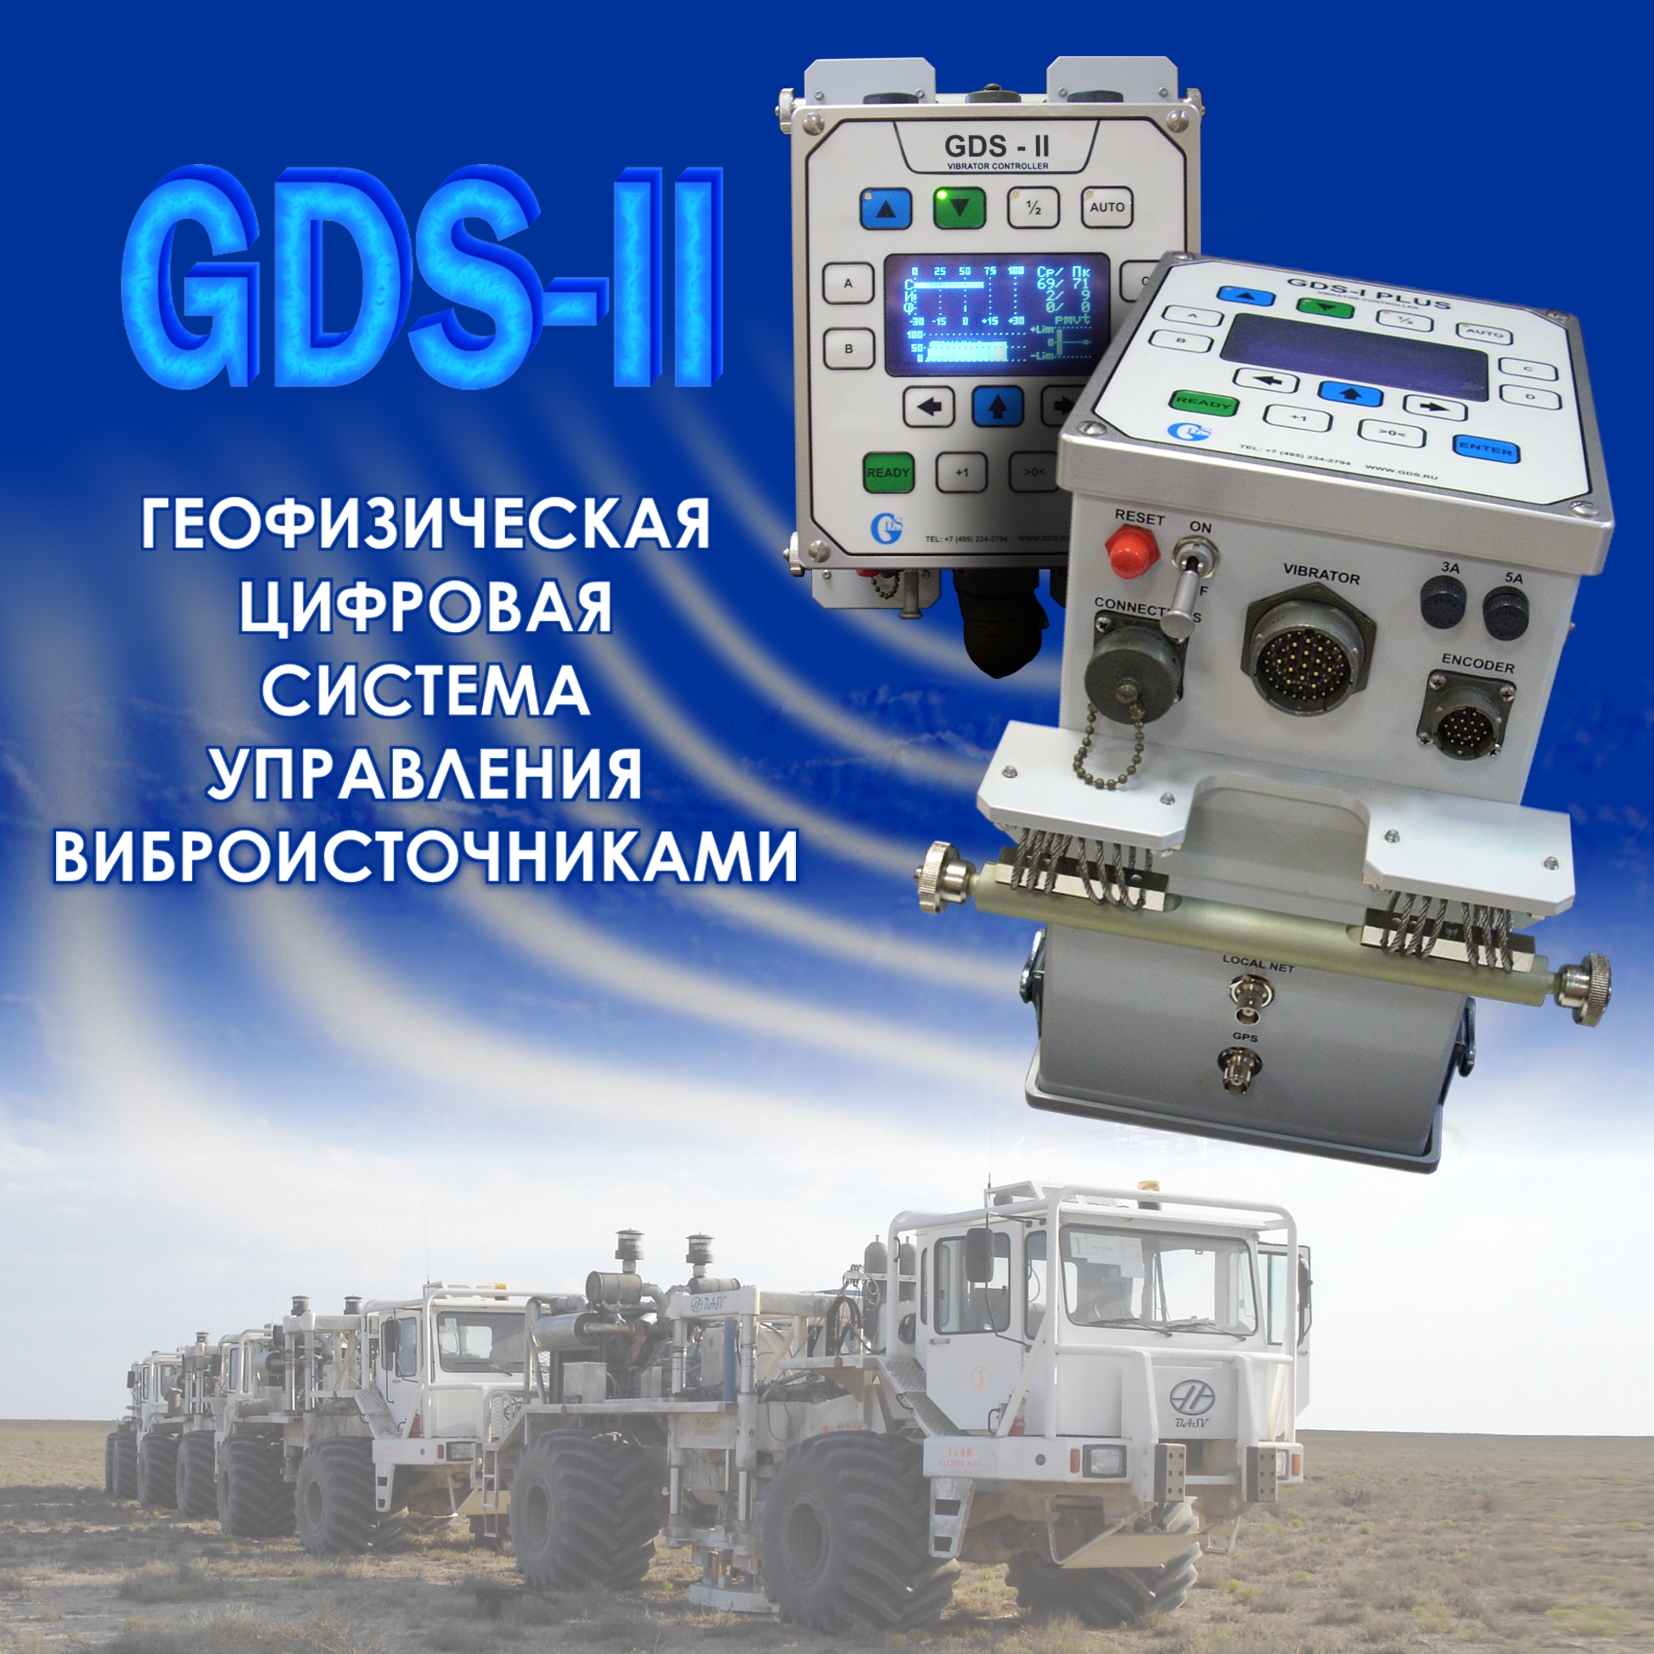 GDS-II